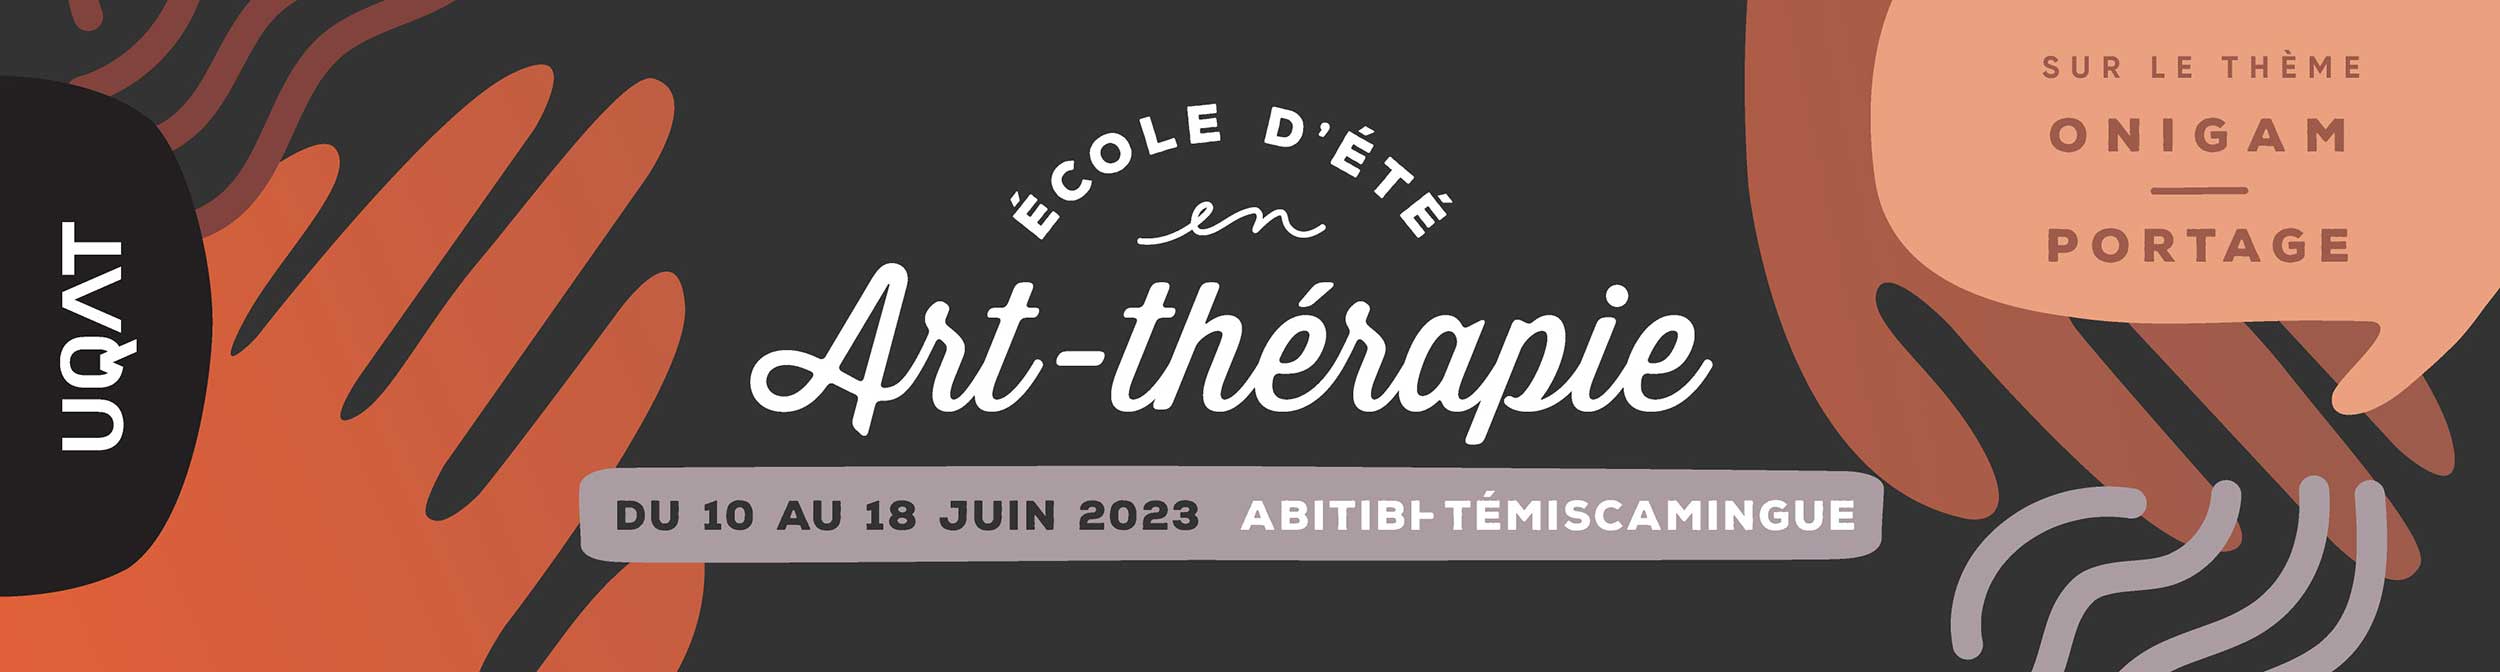 Ecole d'art-therapie 2023